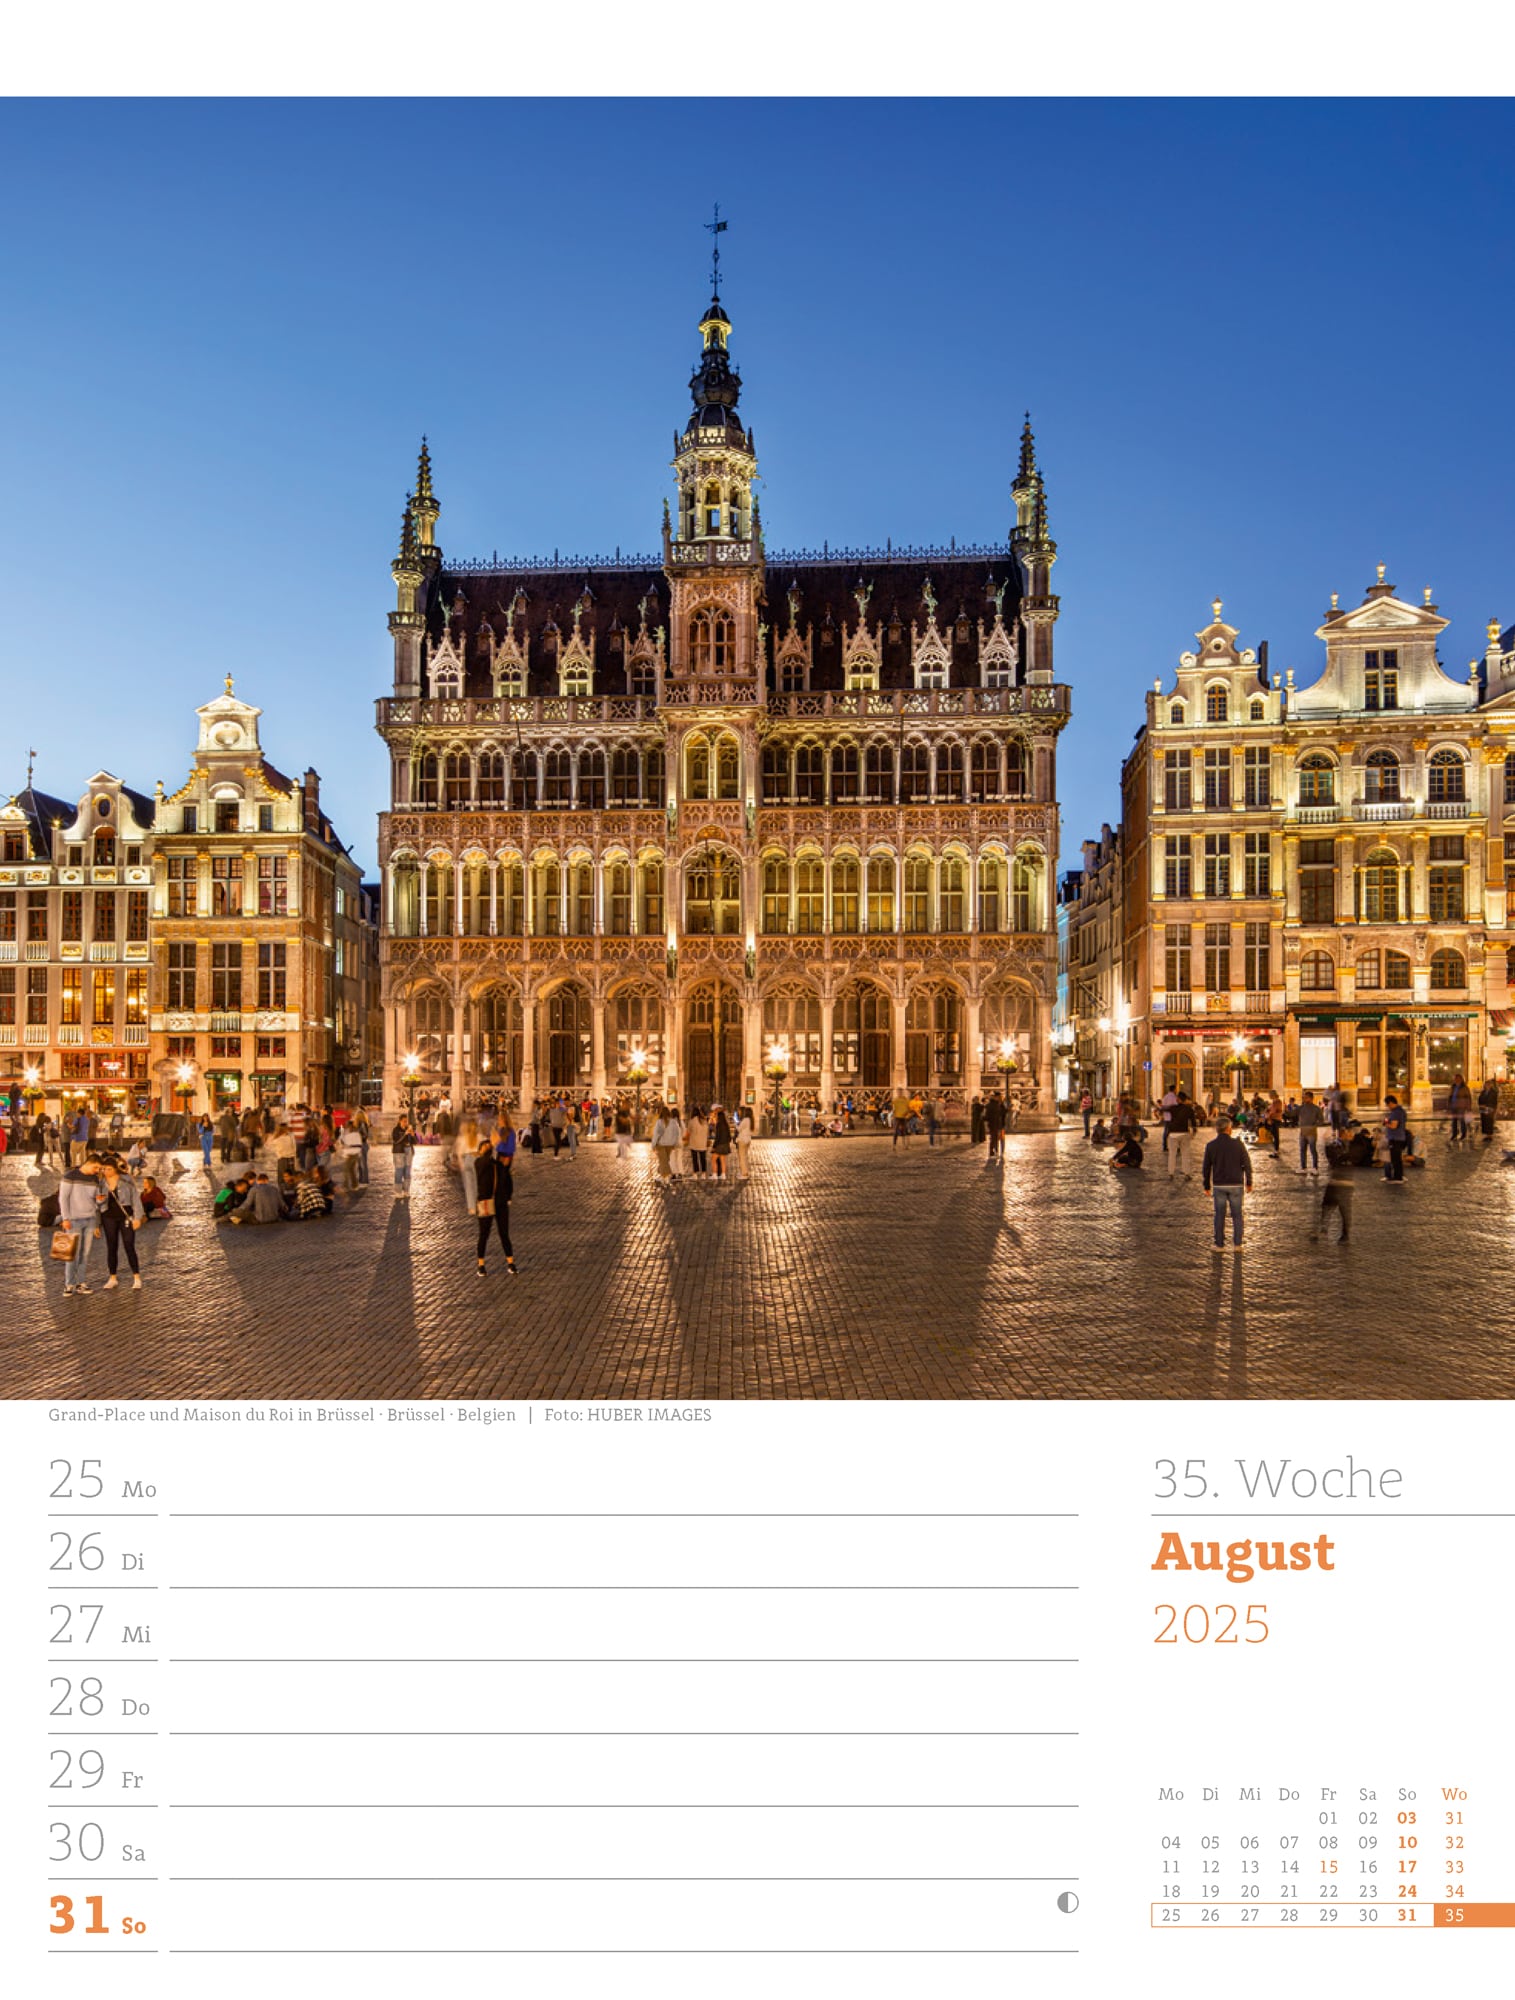 Ackermann Calendar Travel the World 2025 - Weekly Planner - Inside View 38